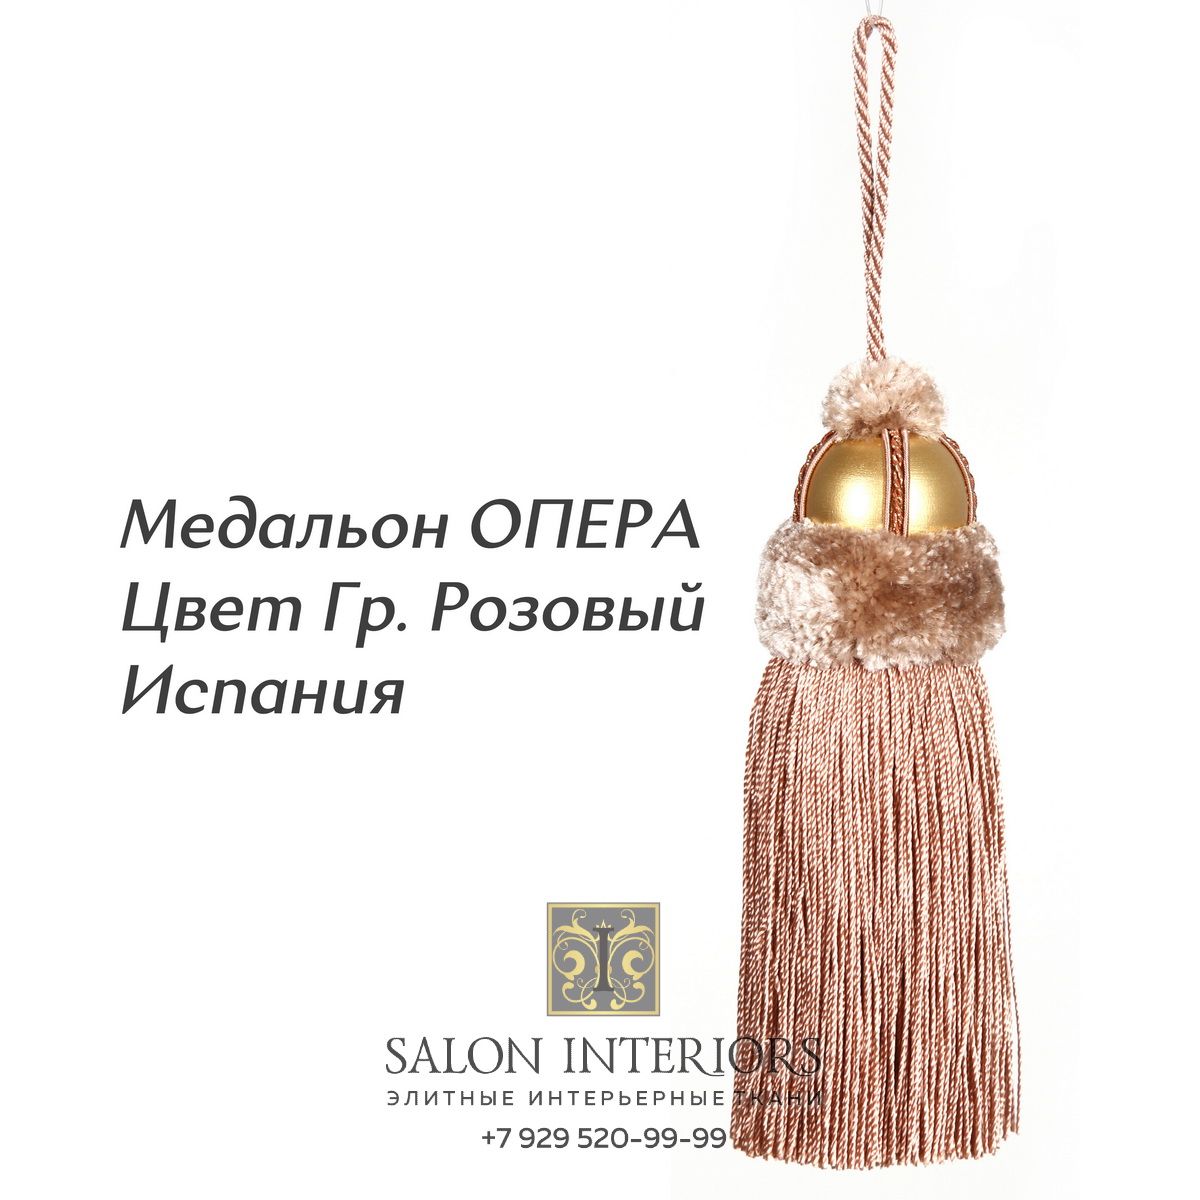 Медальон "ОПЕРА" Арт MK991-1958 Цвет Гр.розовый разм.18см Испания